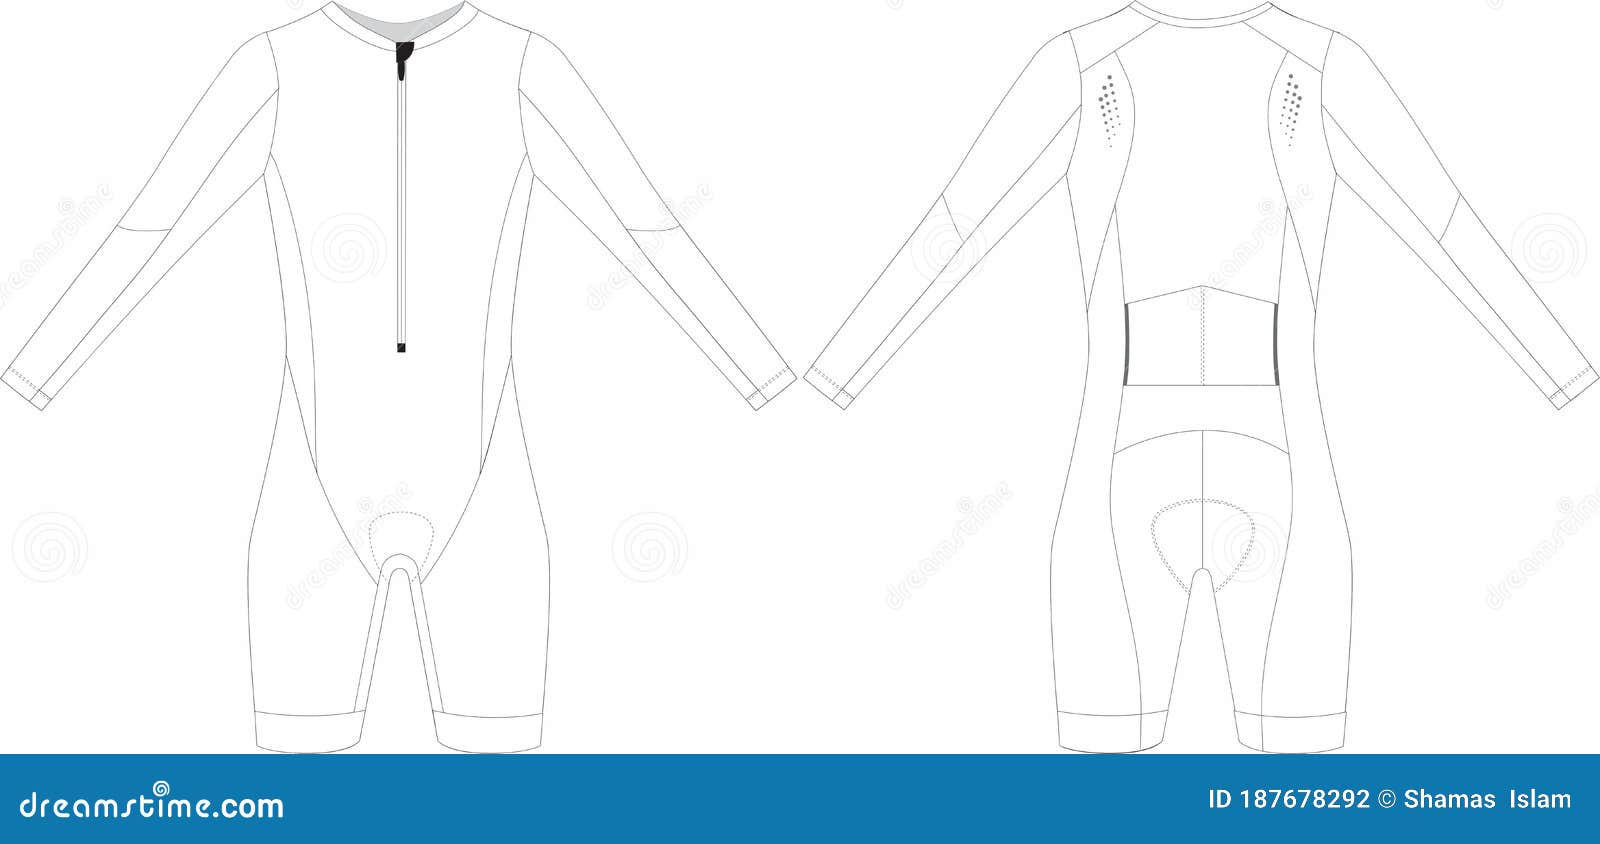 Custom Long Sleeve Triathlon Skinsuit Blank Templates Mock Up ...